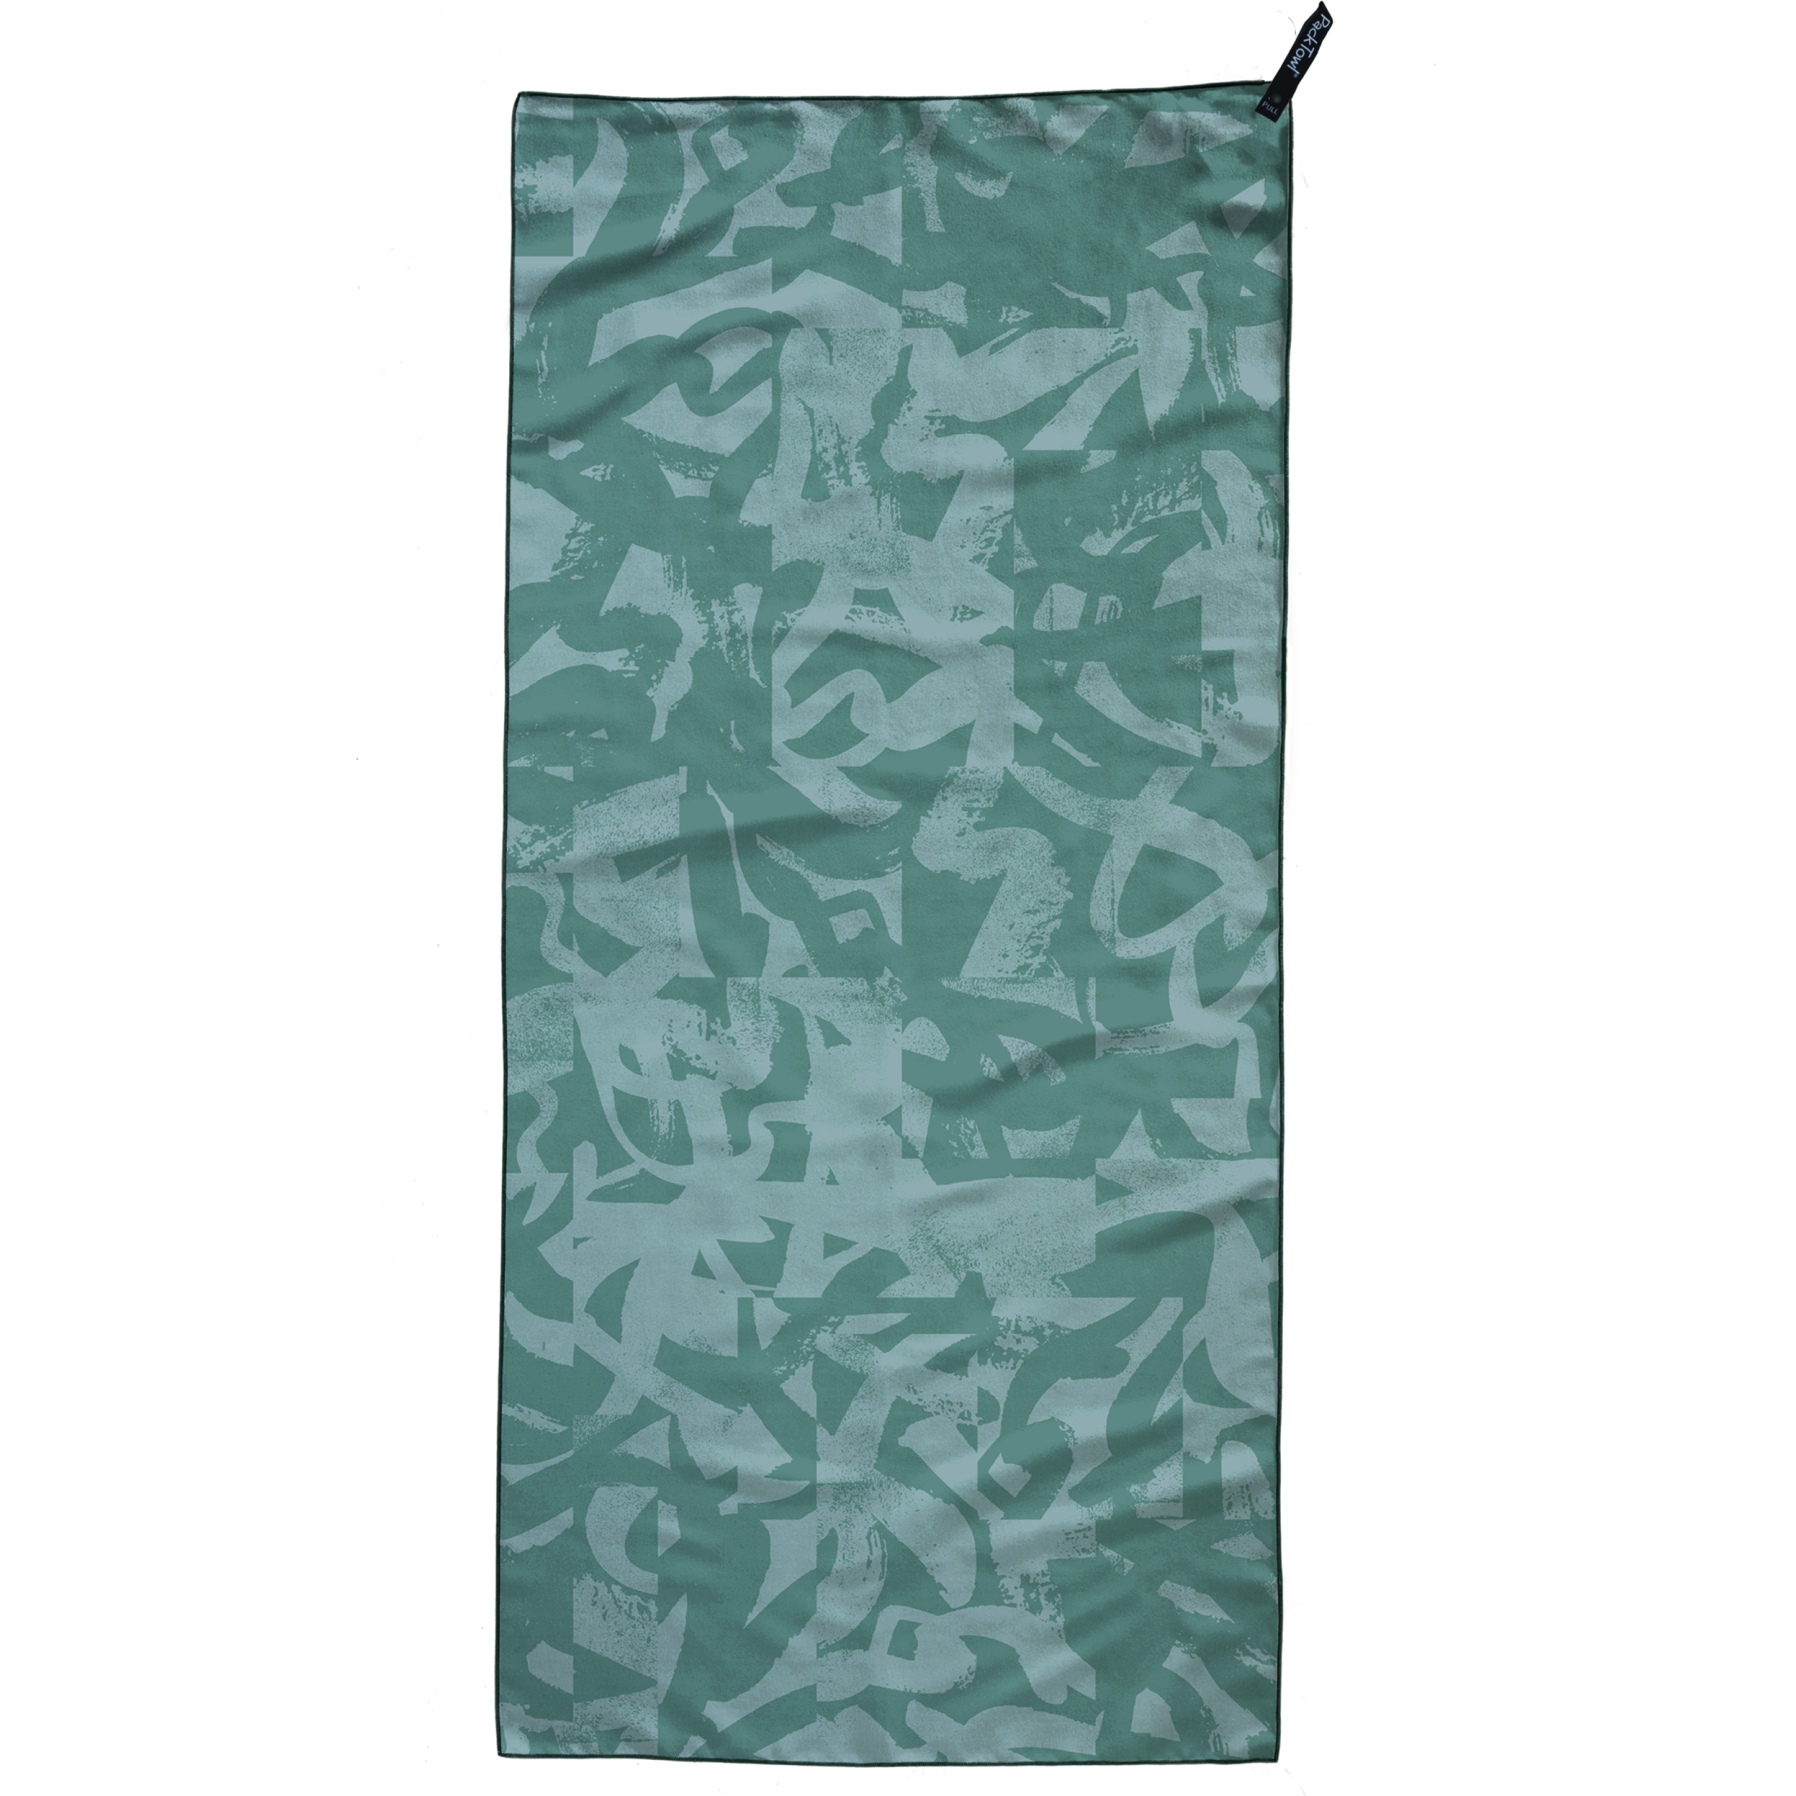 Productfoto van PackTowl Personal Body Handdoek - scribble